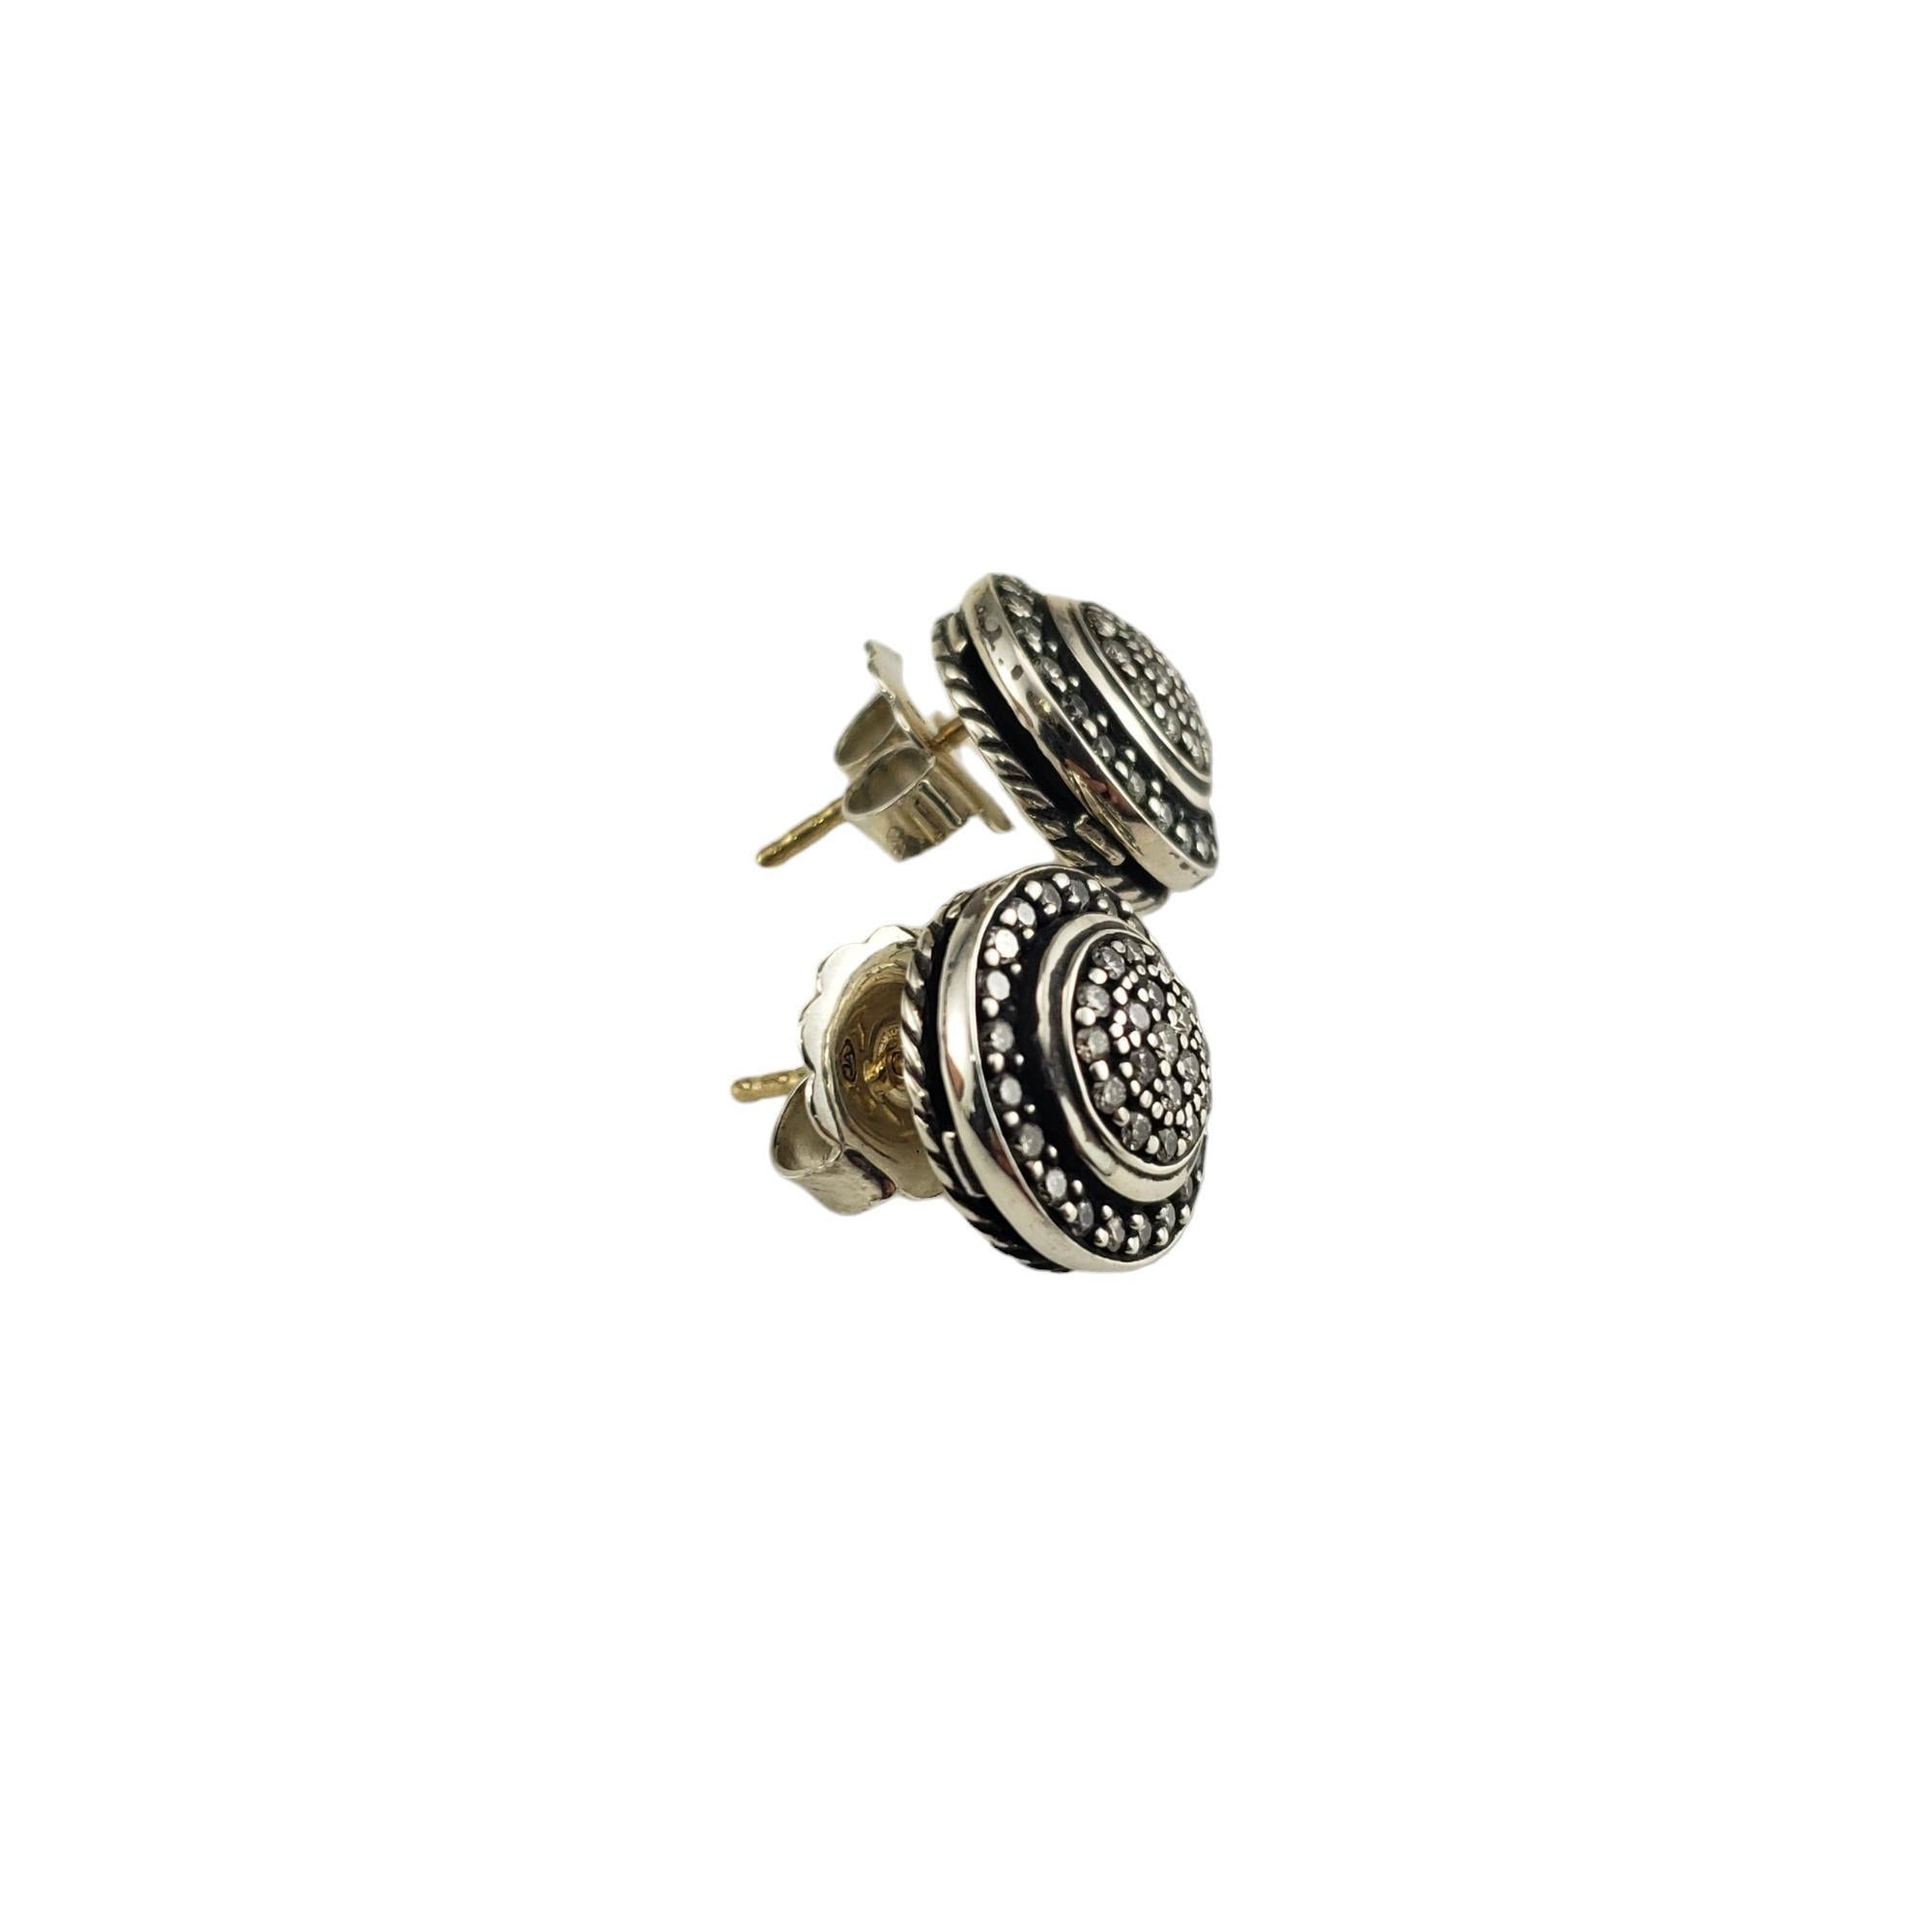 Vintage David Yurman Cerise Diamond Stud Earrings-

These elegant David Yurman earrings each feature 40 round brilliant cut diamonds set in classic sterling silver.
Push back closures.

Approximate total diamond weight: 1.0 ct.

Size: 13